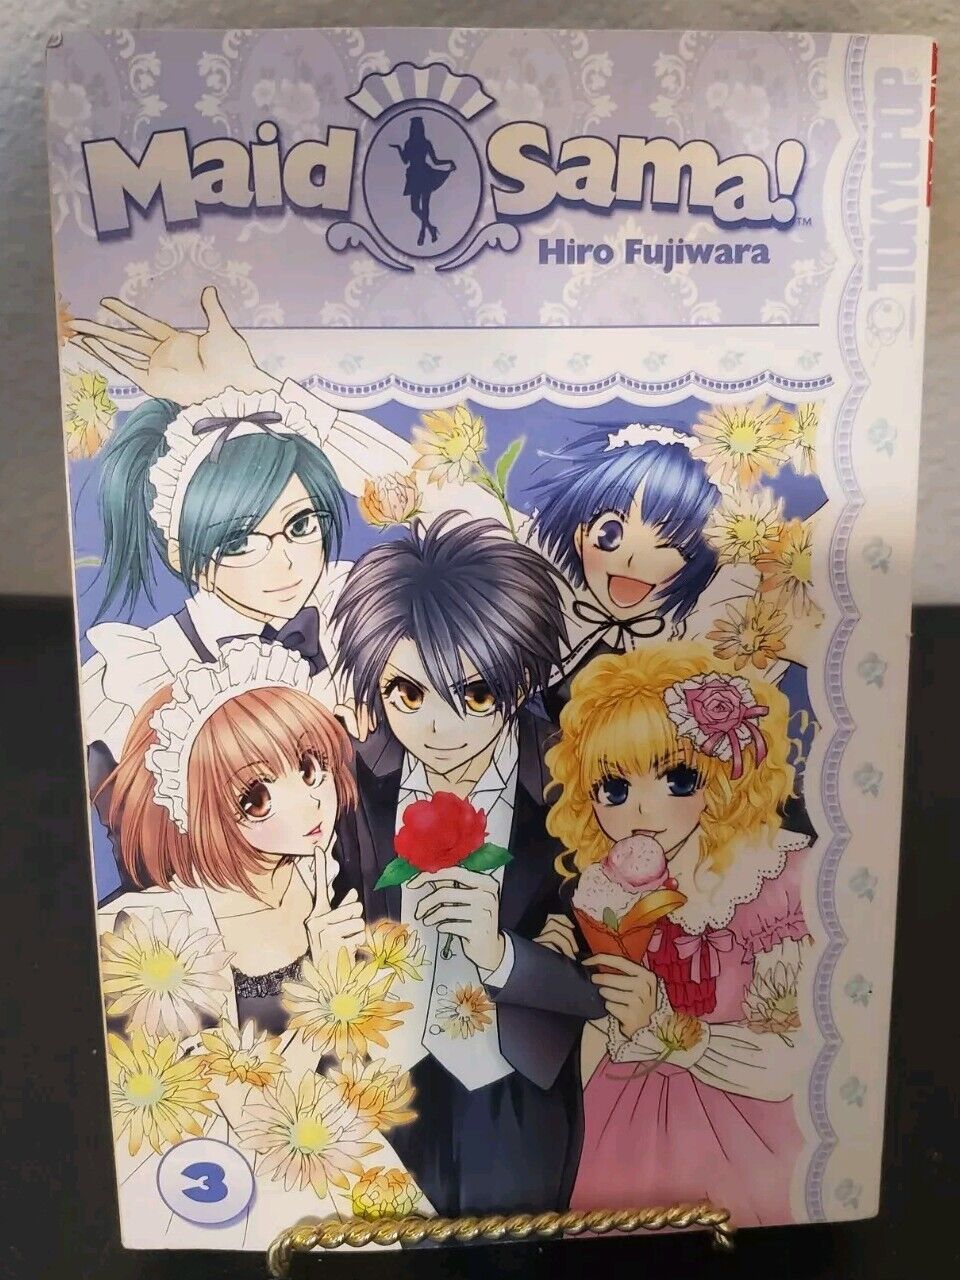 Maid Sama Volume Vol 3 Manga English Graphic Novel Comic Book